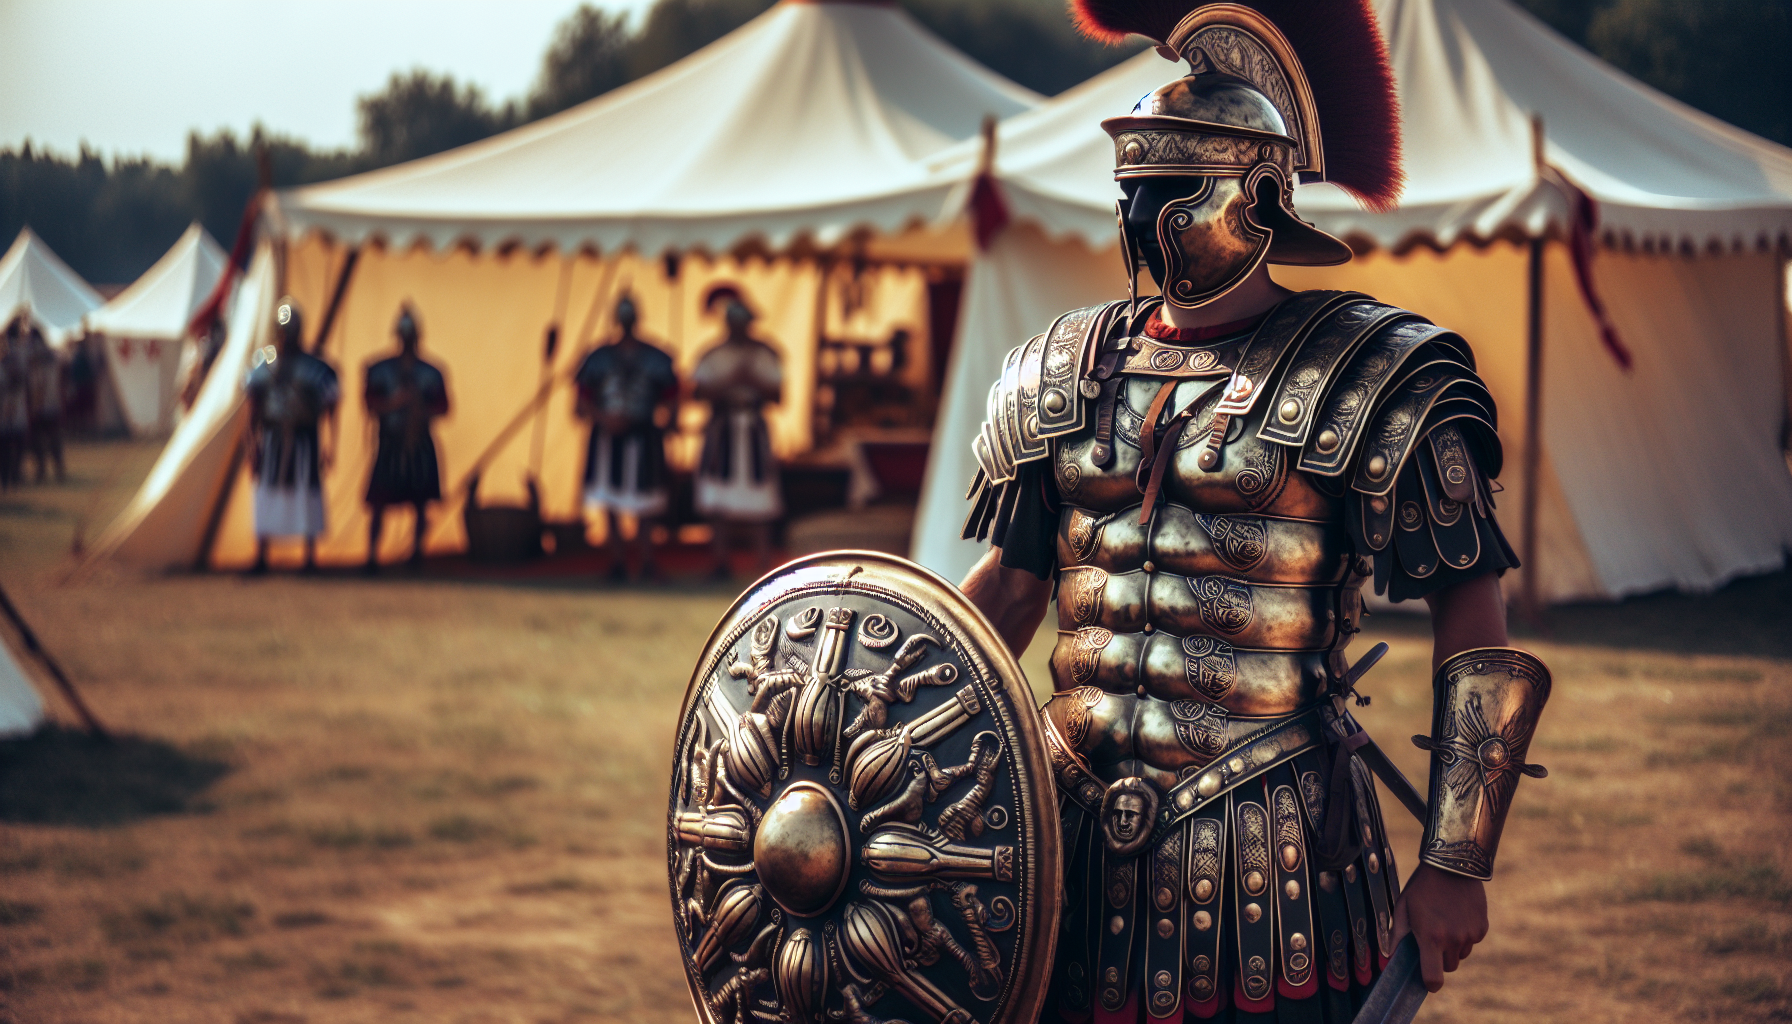 Roman Principes armor and protection